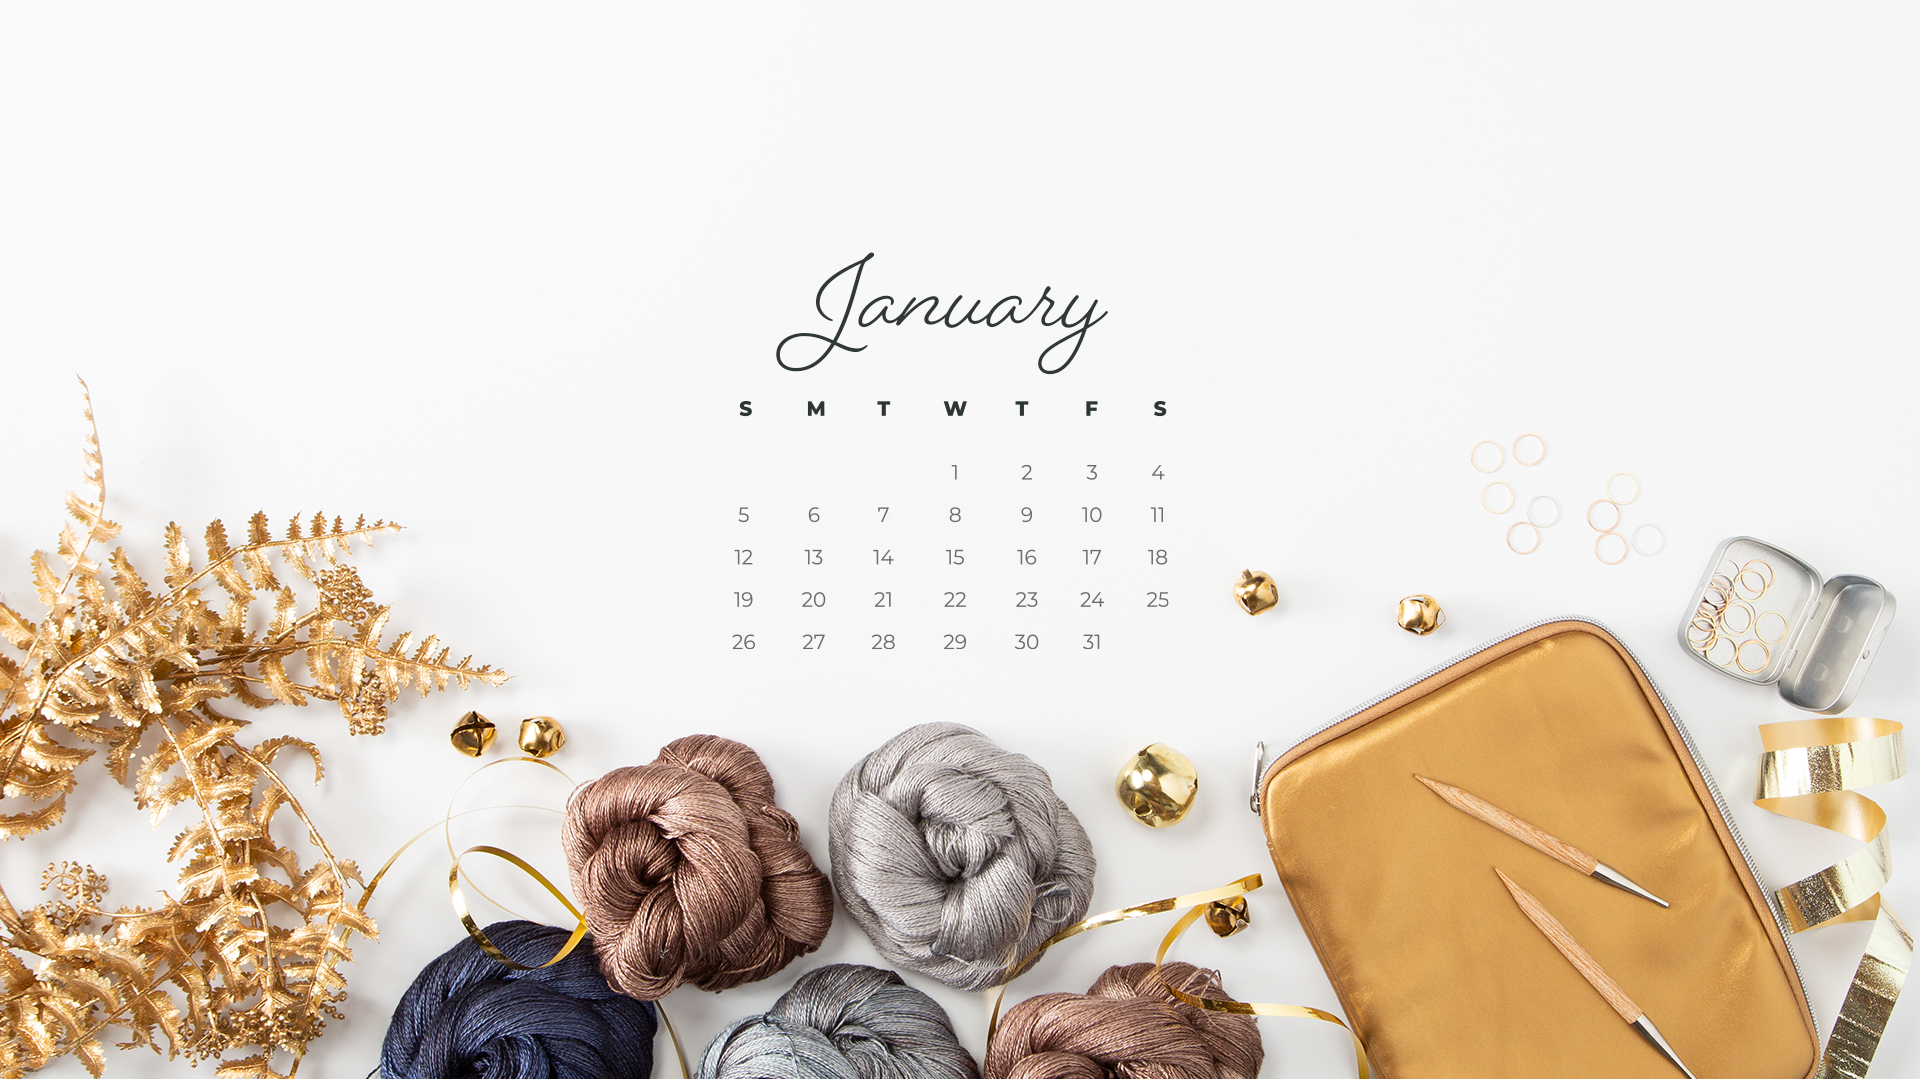 Free Downloadable January Calendar - KnitPicks Staff Knitting Blog